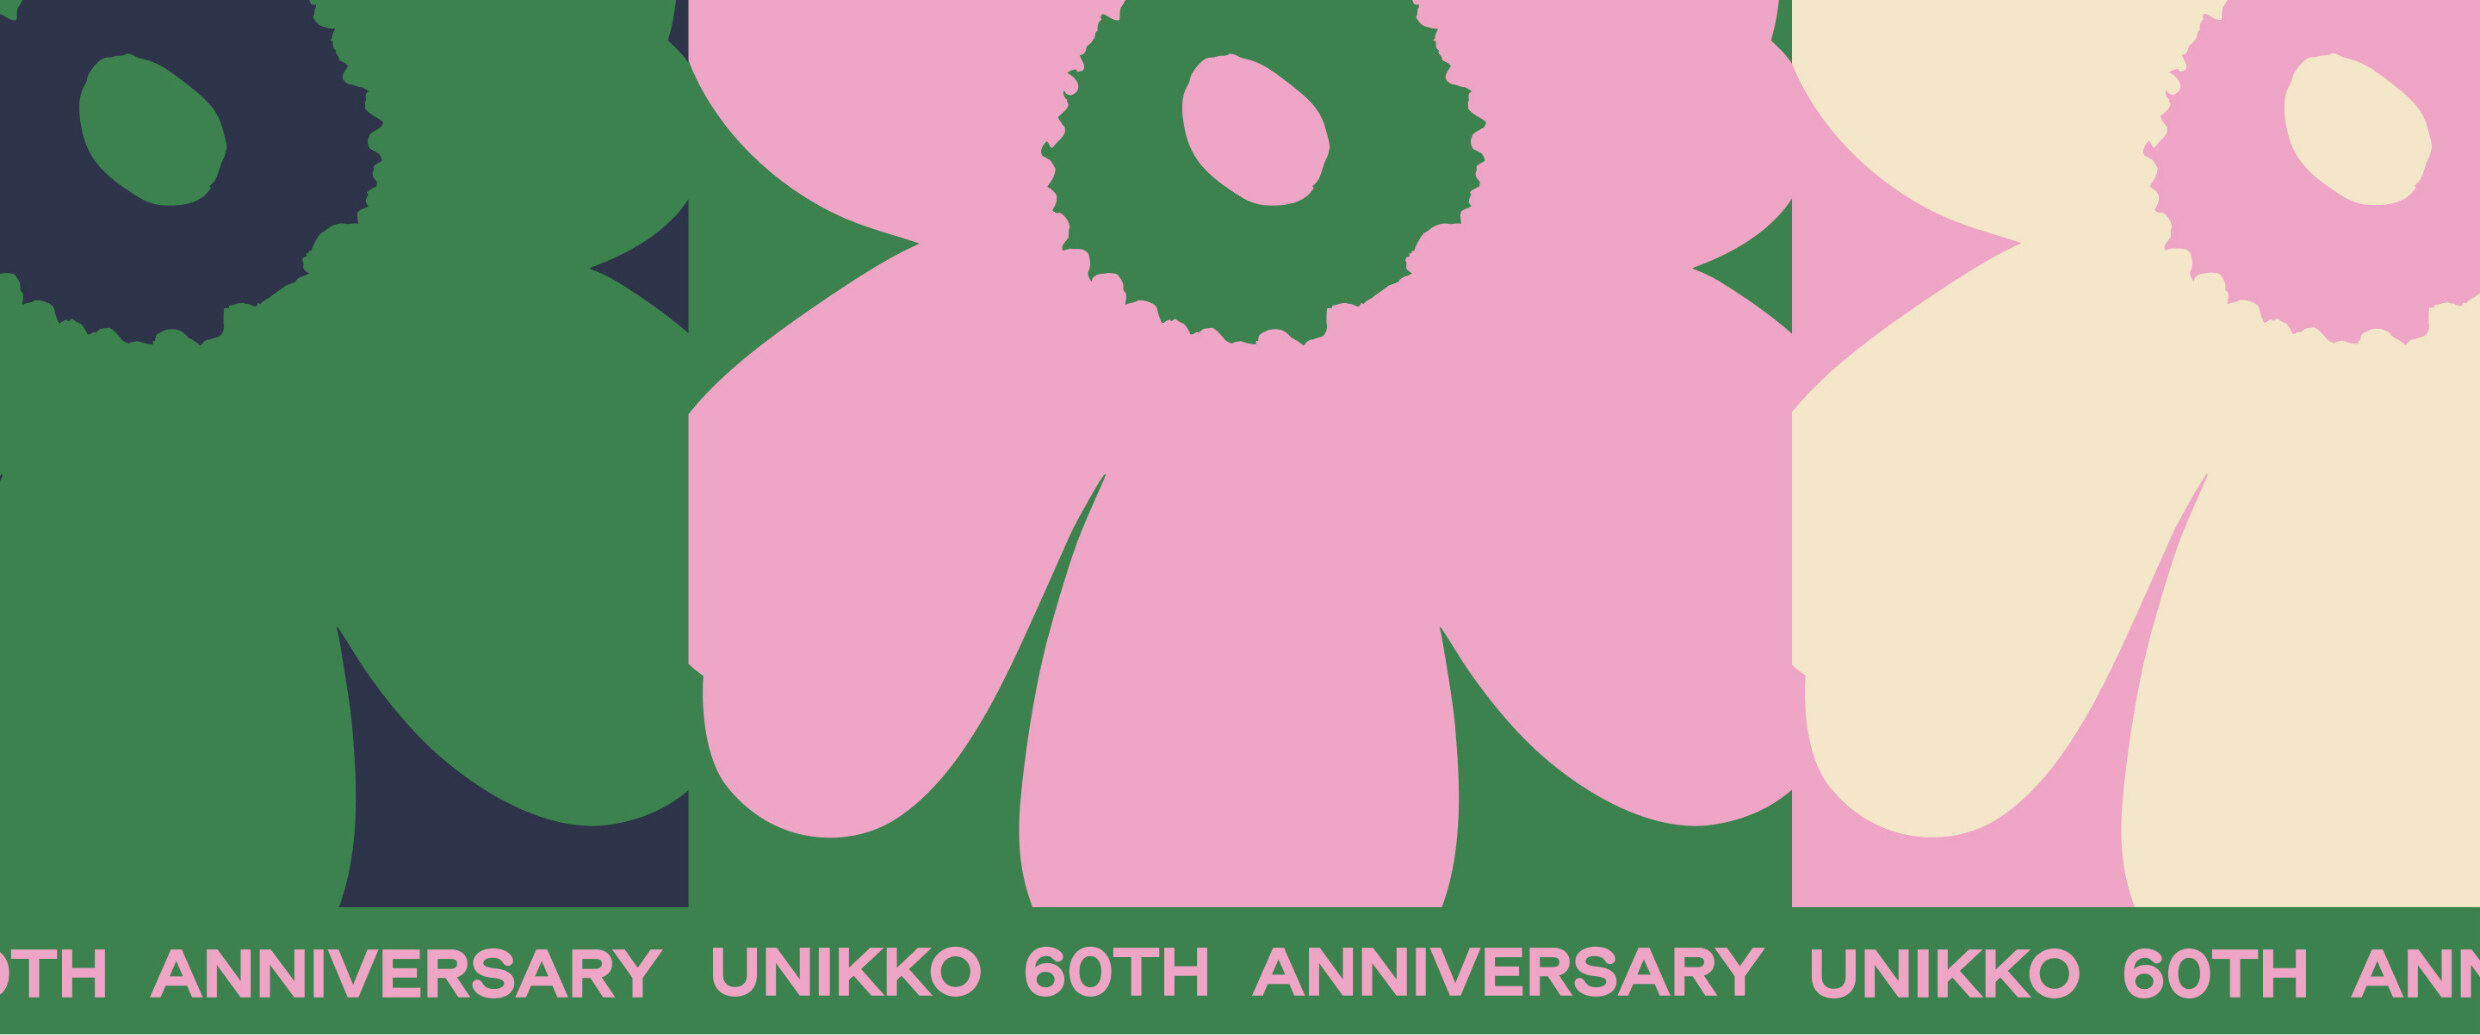 Unikko 60th anniversary